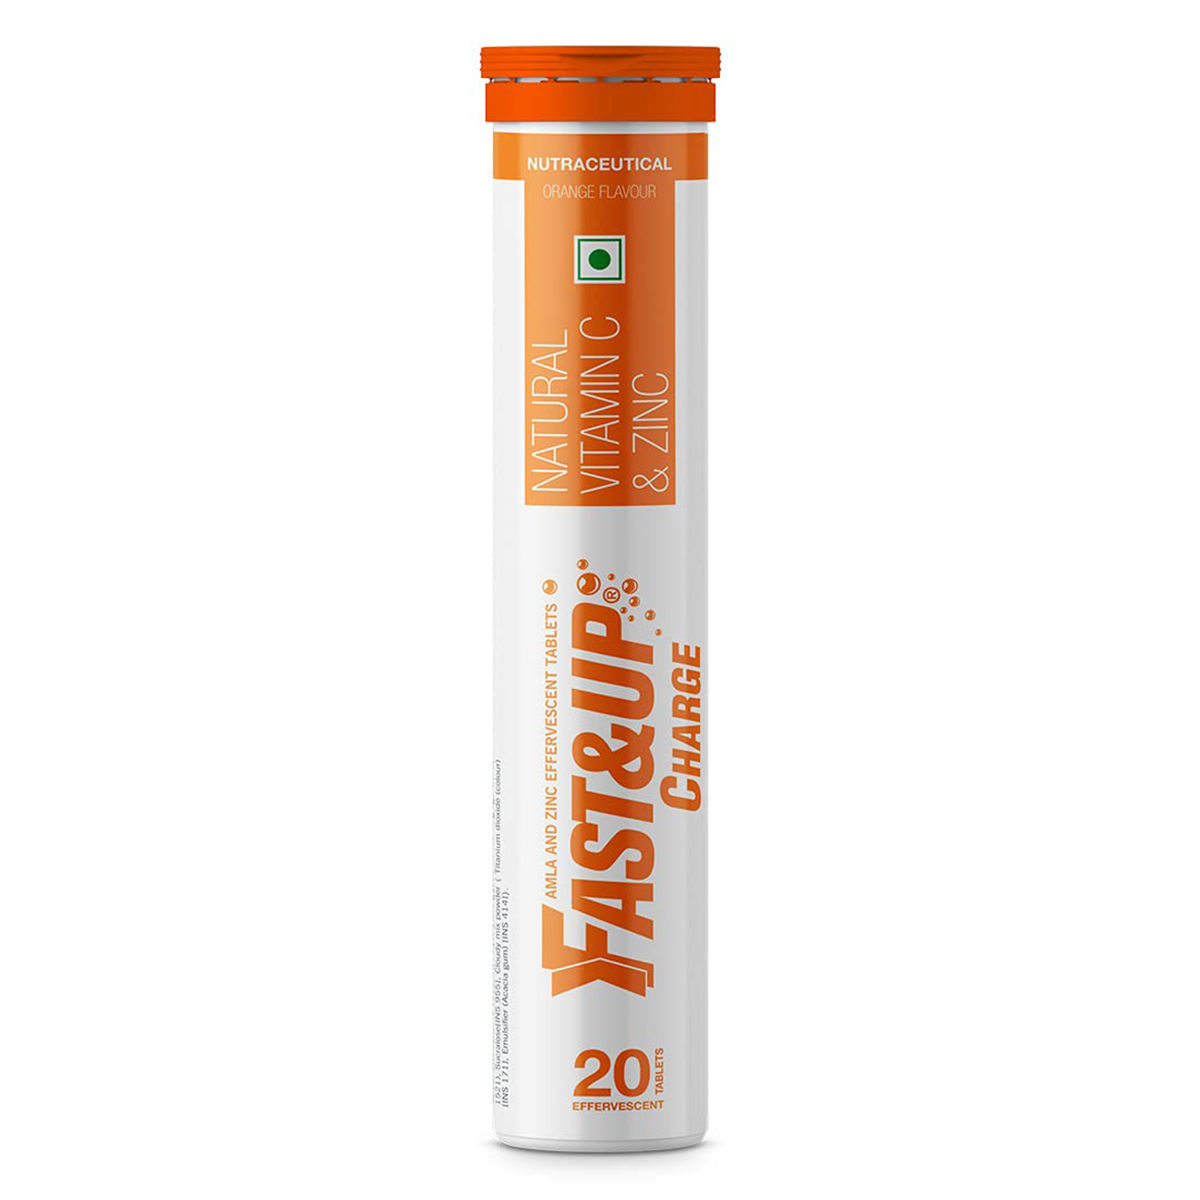 Buy Fast&Up Charge Natural Vitamin C & Zinc Orange Flavour, 20 Effervescent Tablets Online